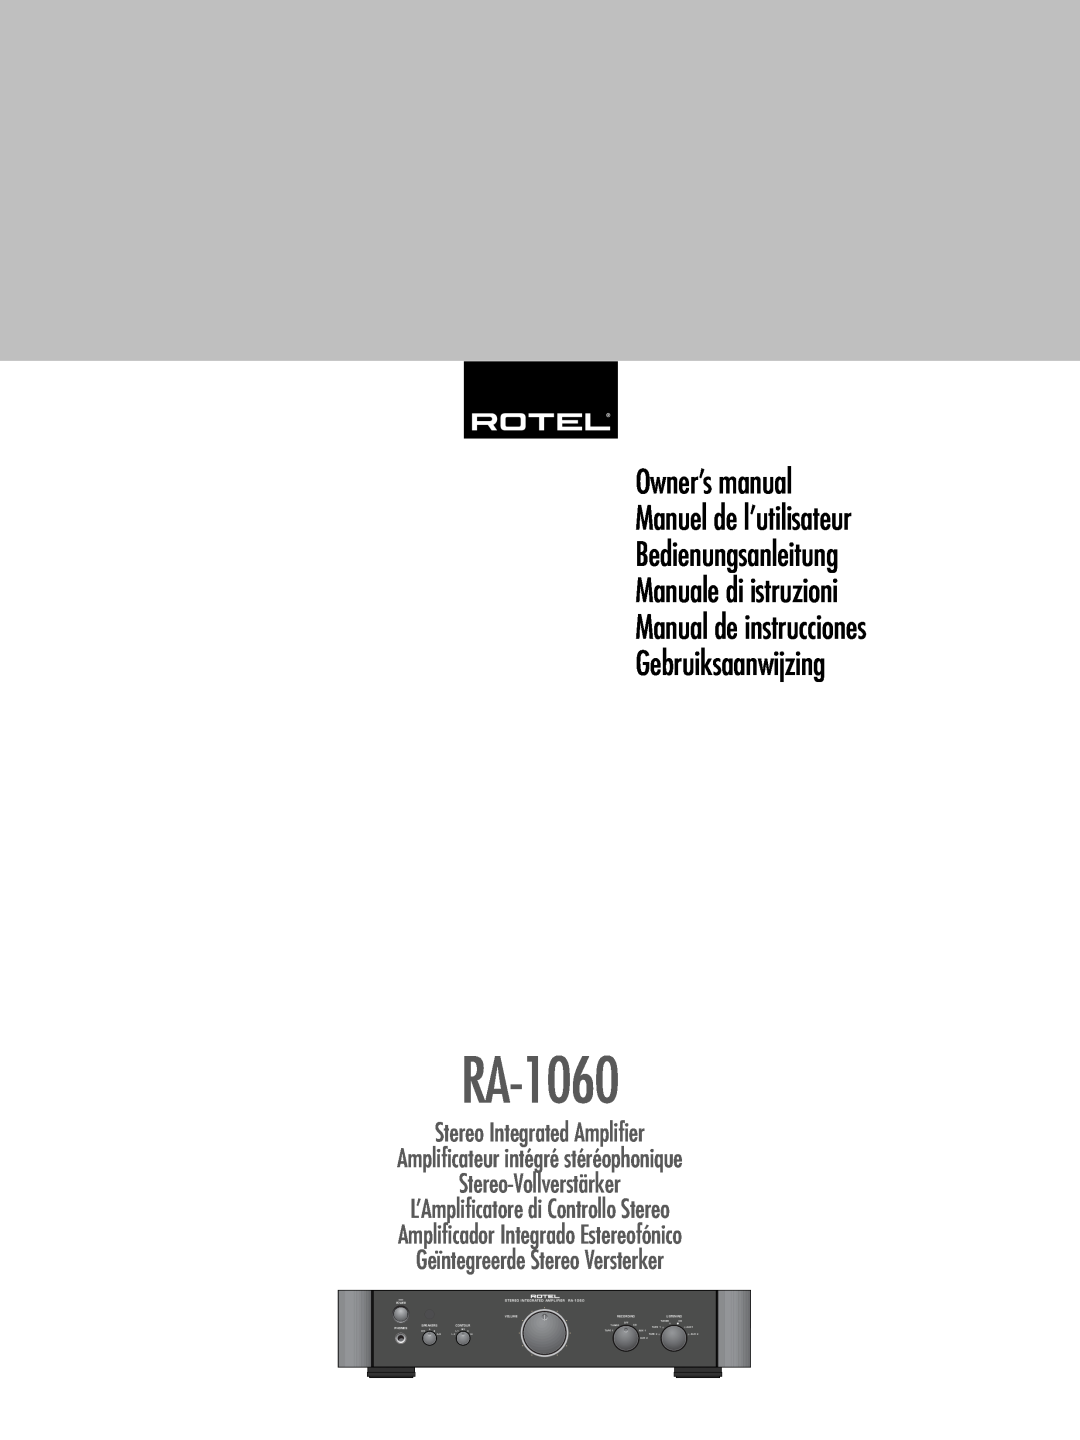 Rotel RA-1060 owner manual Bedienungsanleitung Manuale di istruzioni, Manual de instrucciones Gebruiksaanwijzing 